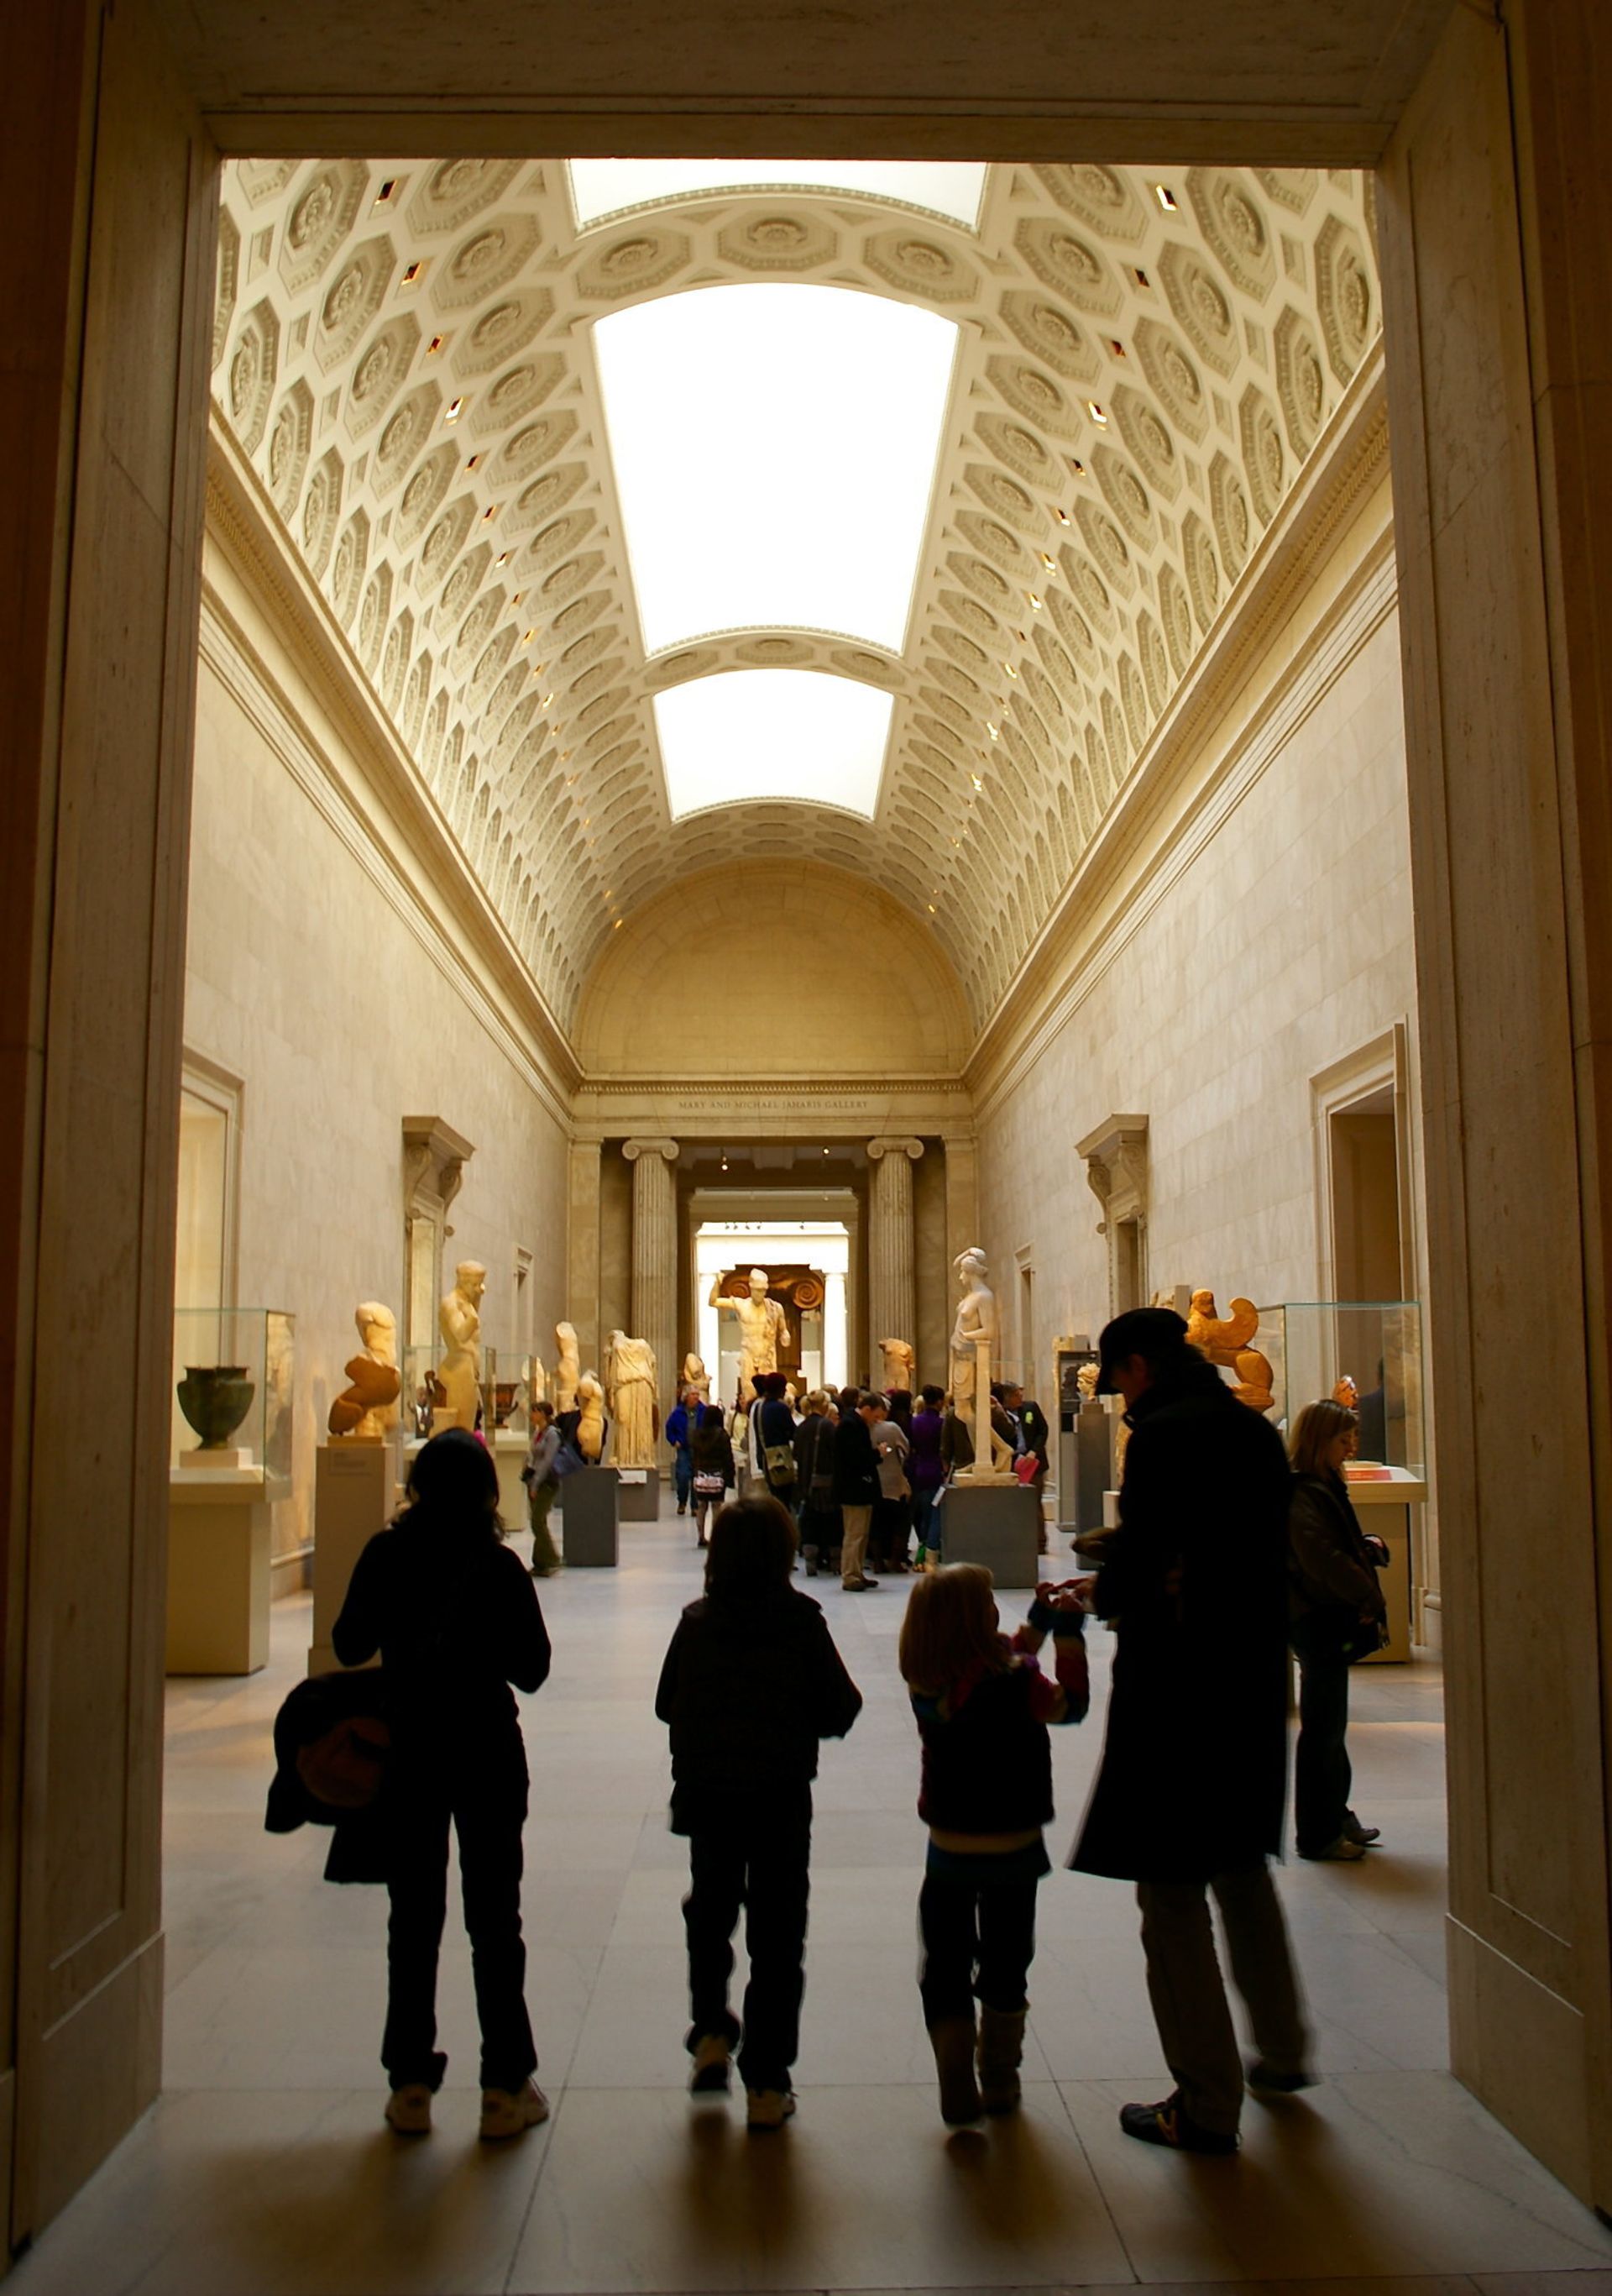 The Greek and Roman galleries of the Metropolitan Museum of Art in New York Photo: hiroumi.mitani